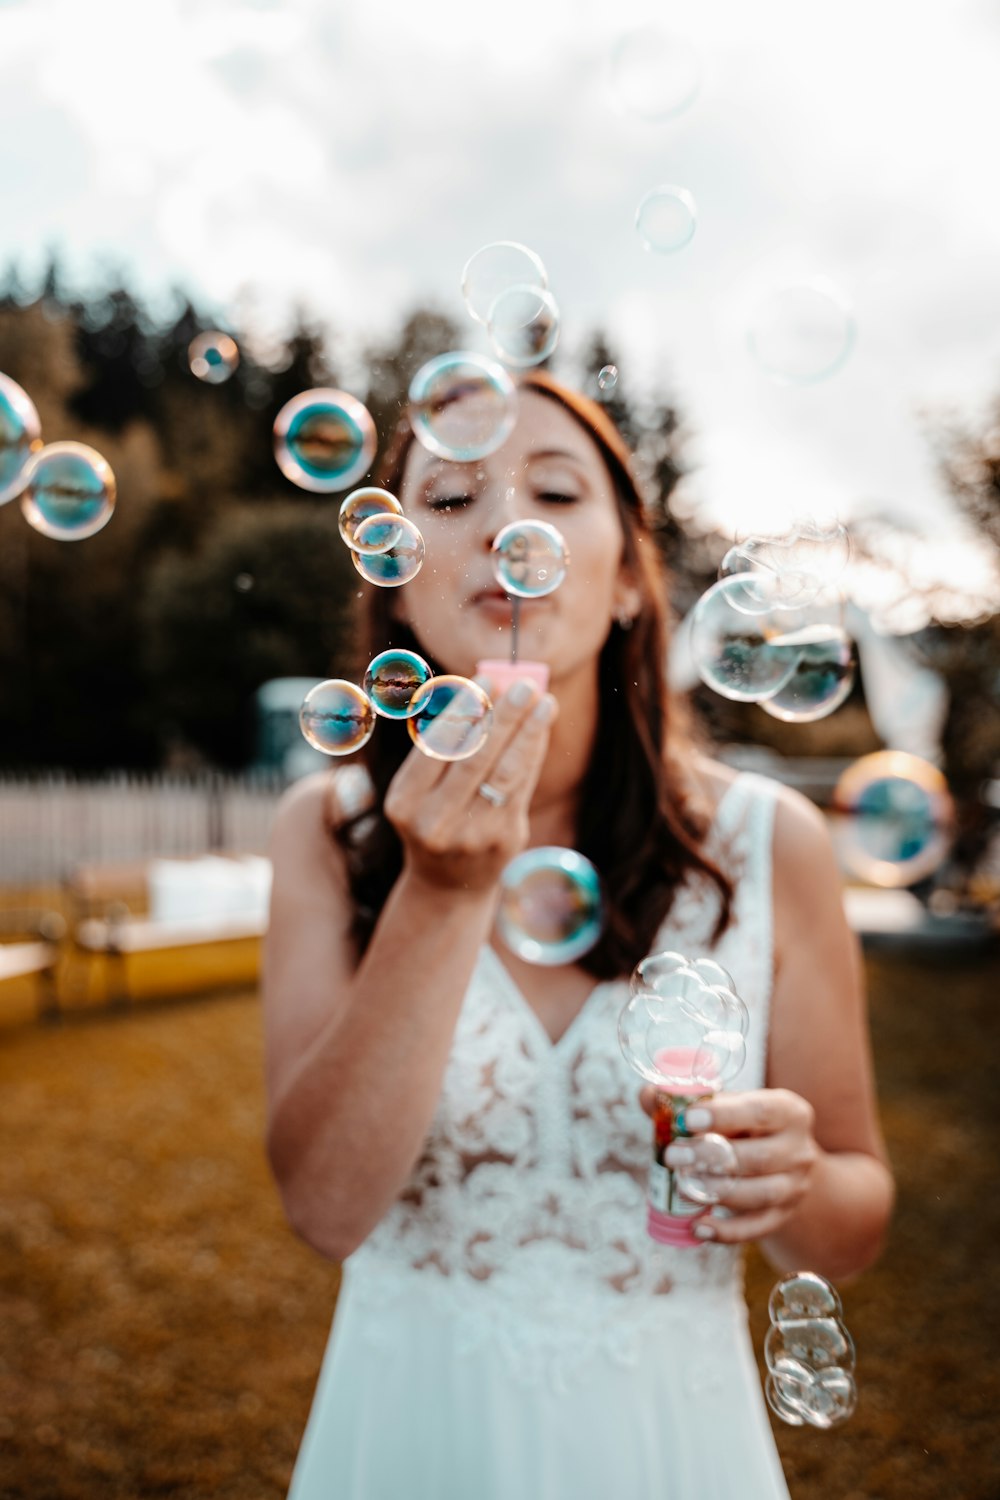 a person holding bubbles